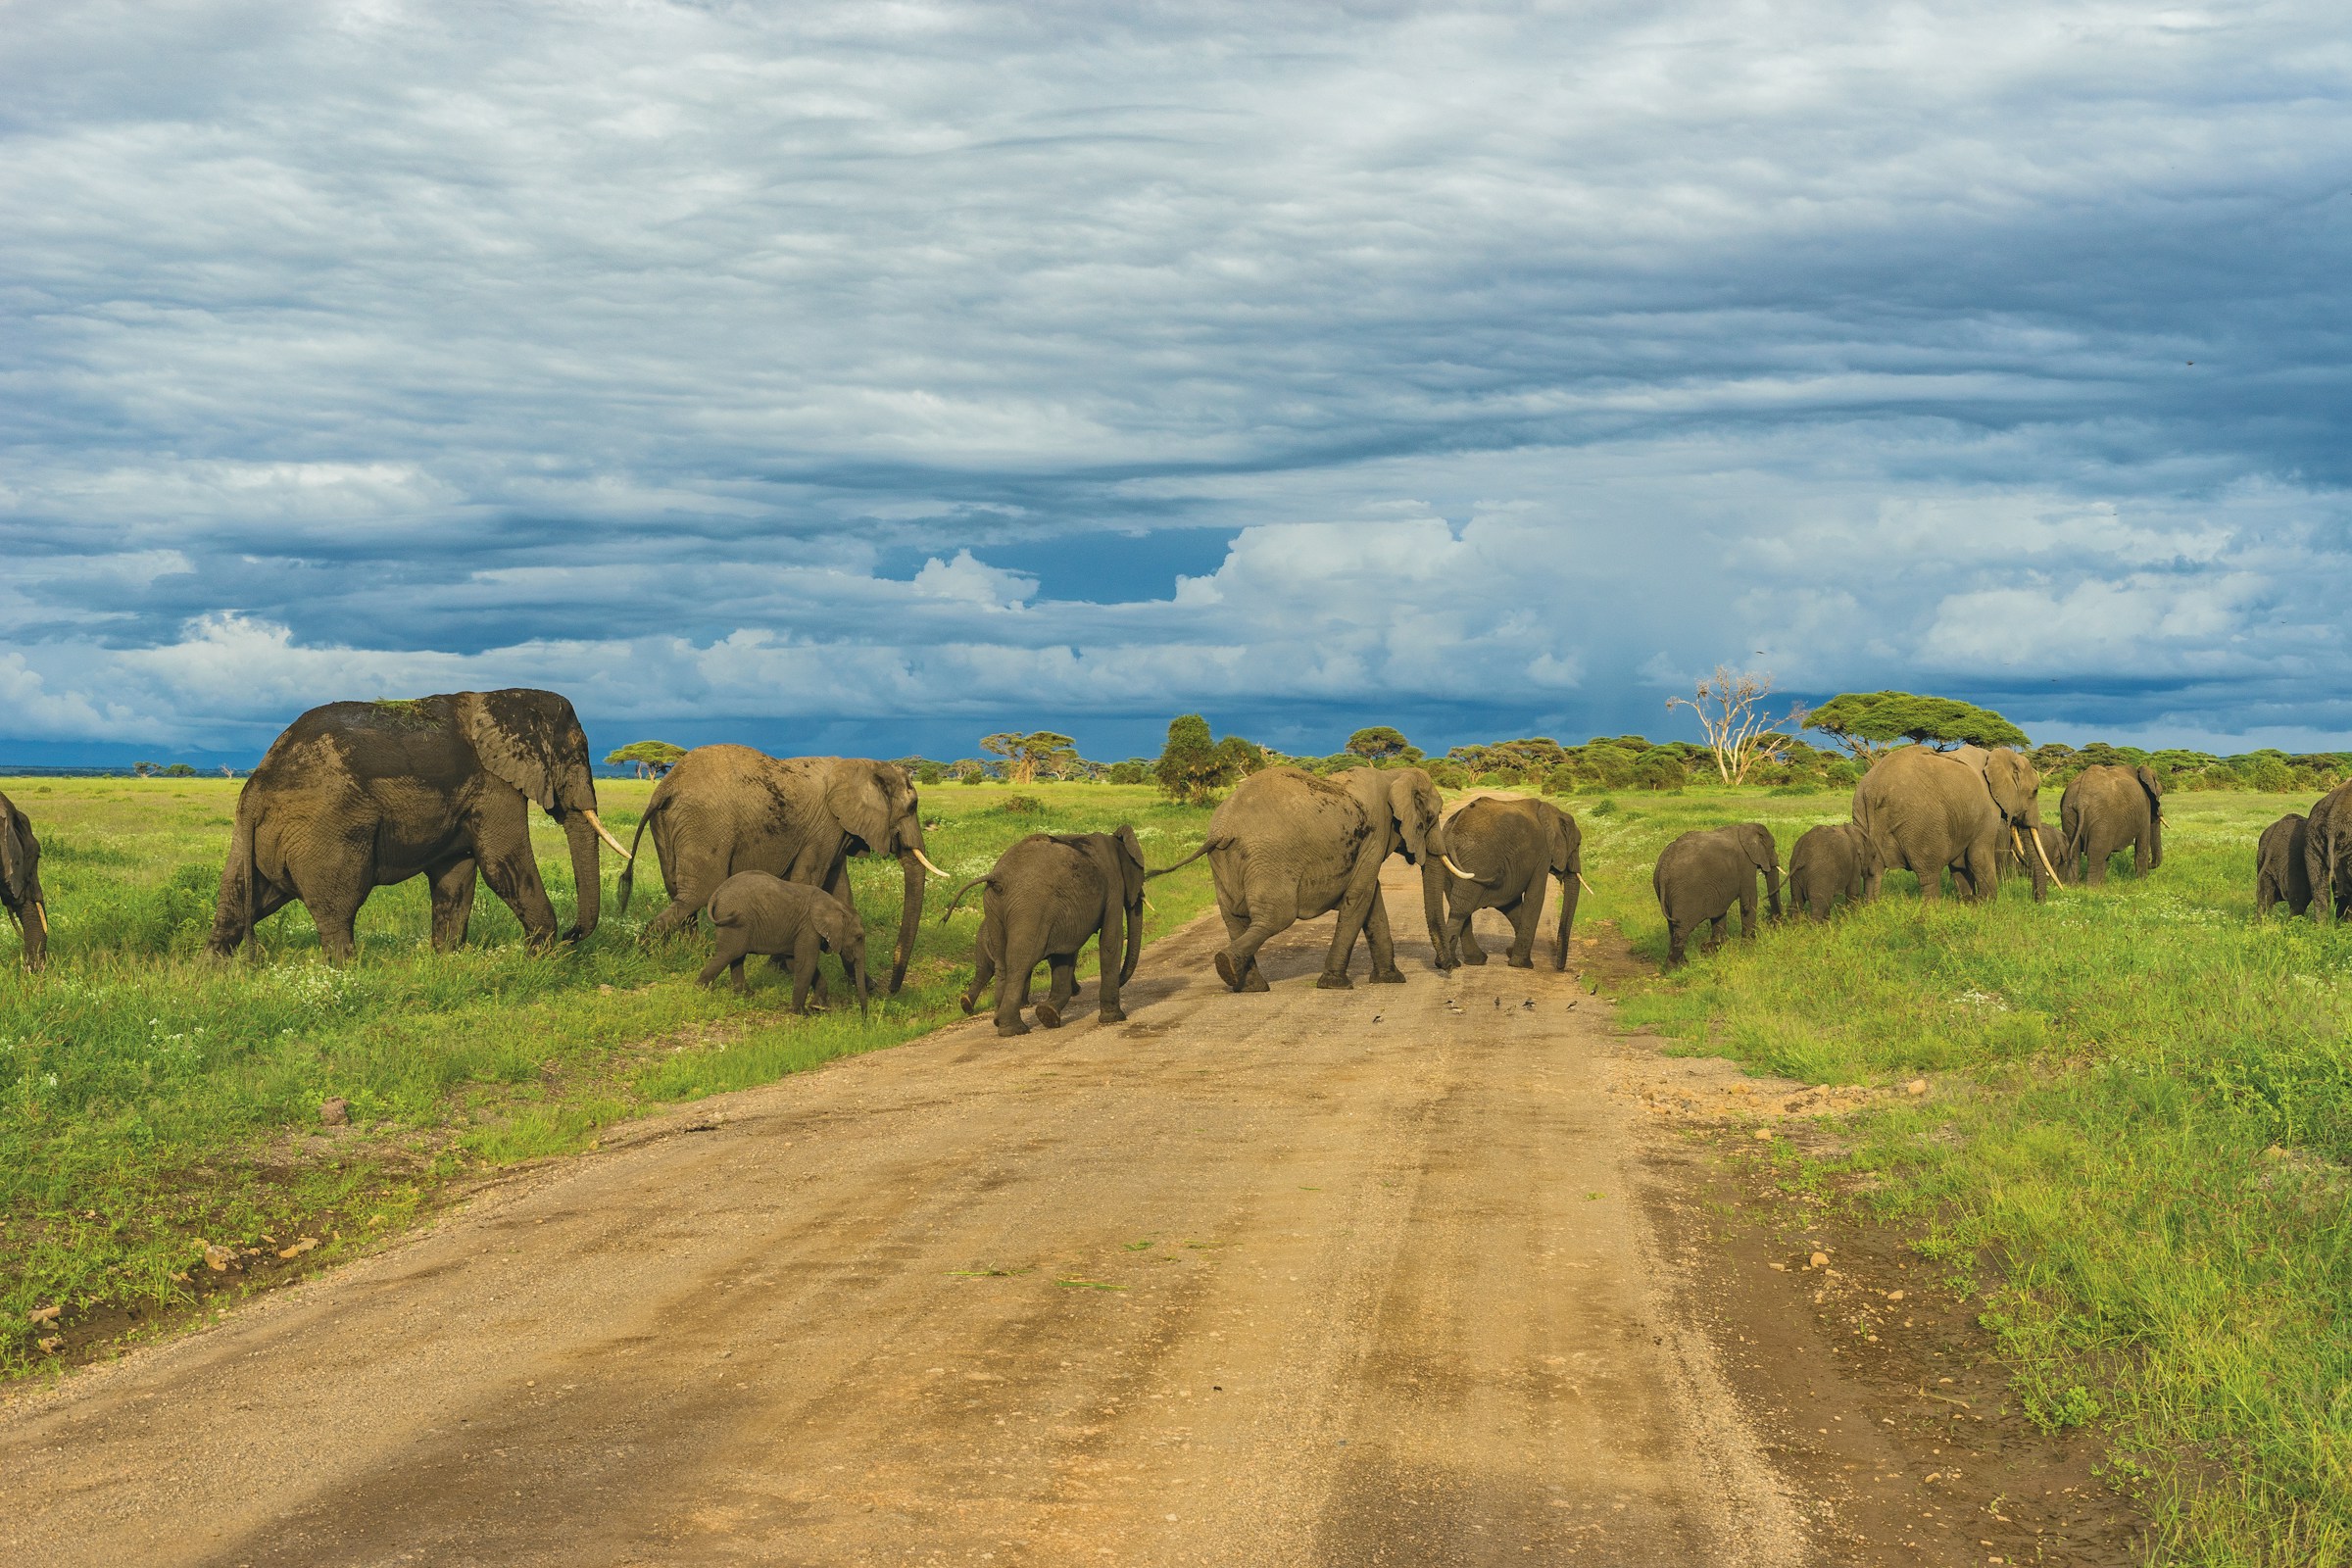 Why choose Tanzania for your wildlife safari